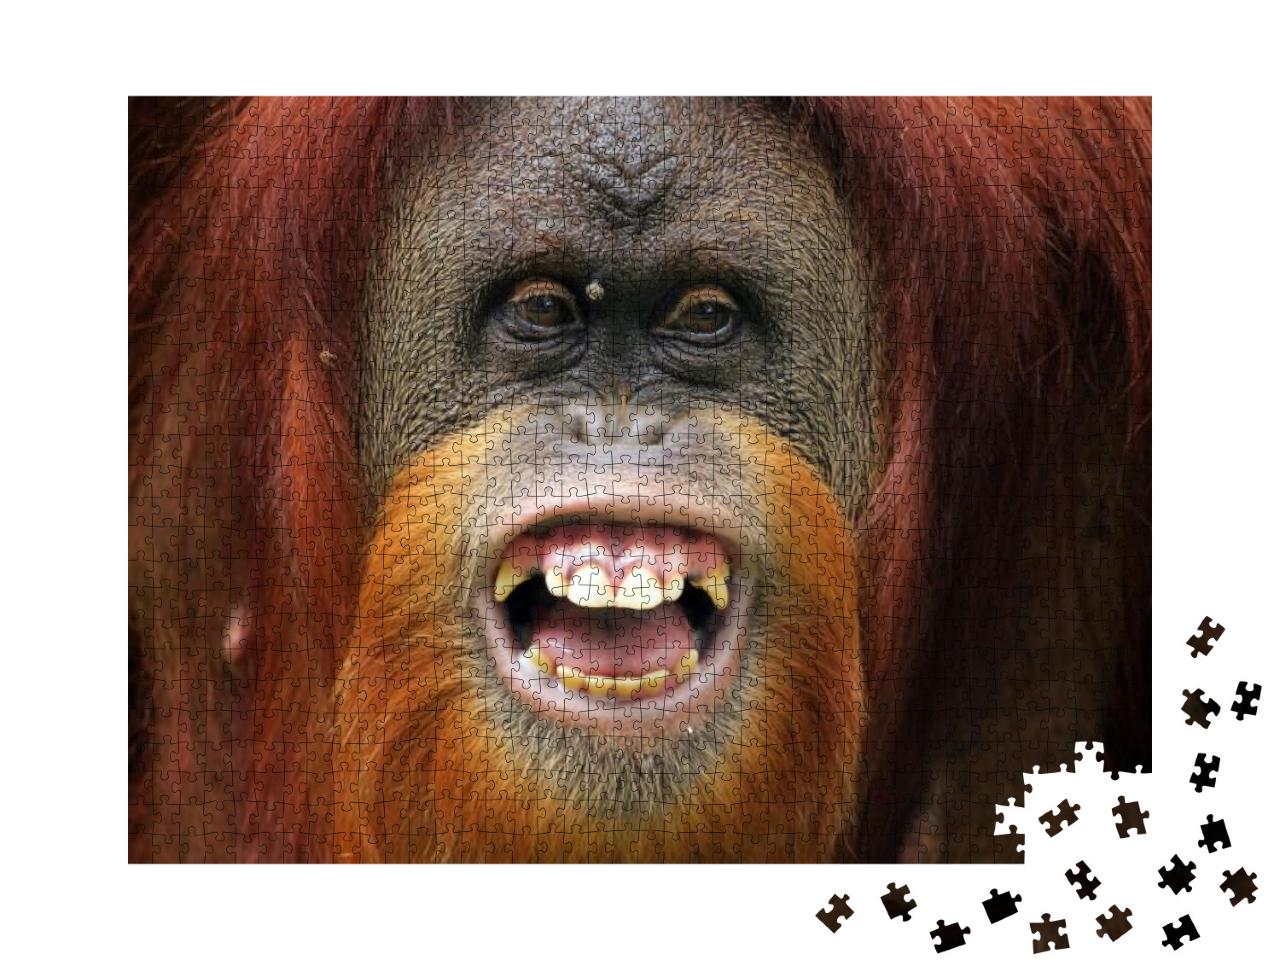 Orangutan Smile, Smile Face of Orangutan Sumatran, Orangu... Jigsaw Puzzle with 1000 pieces